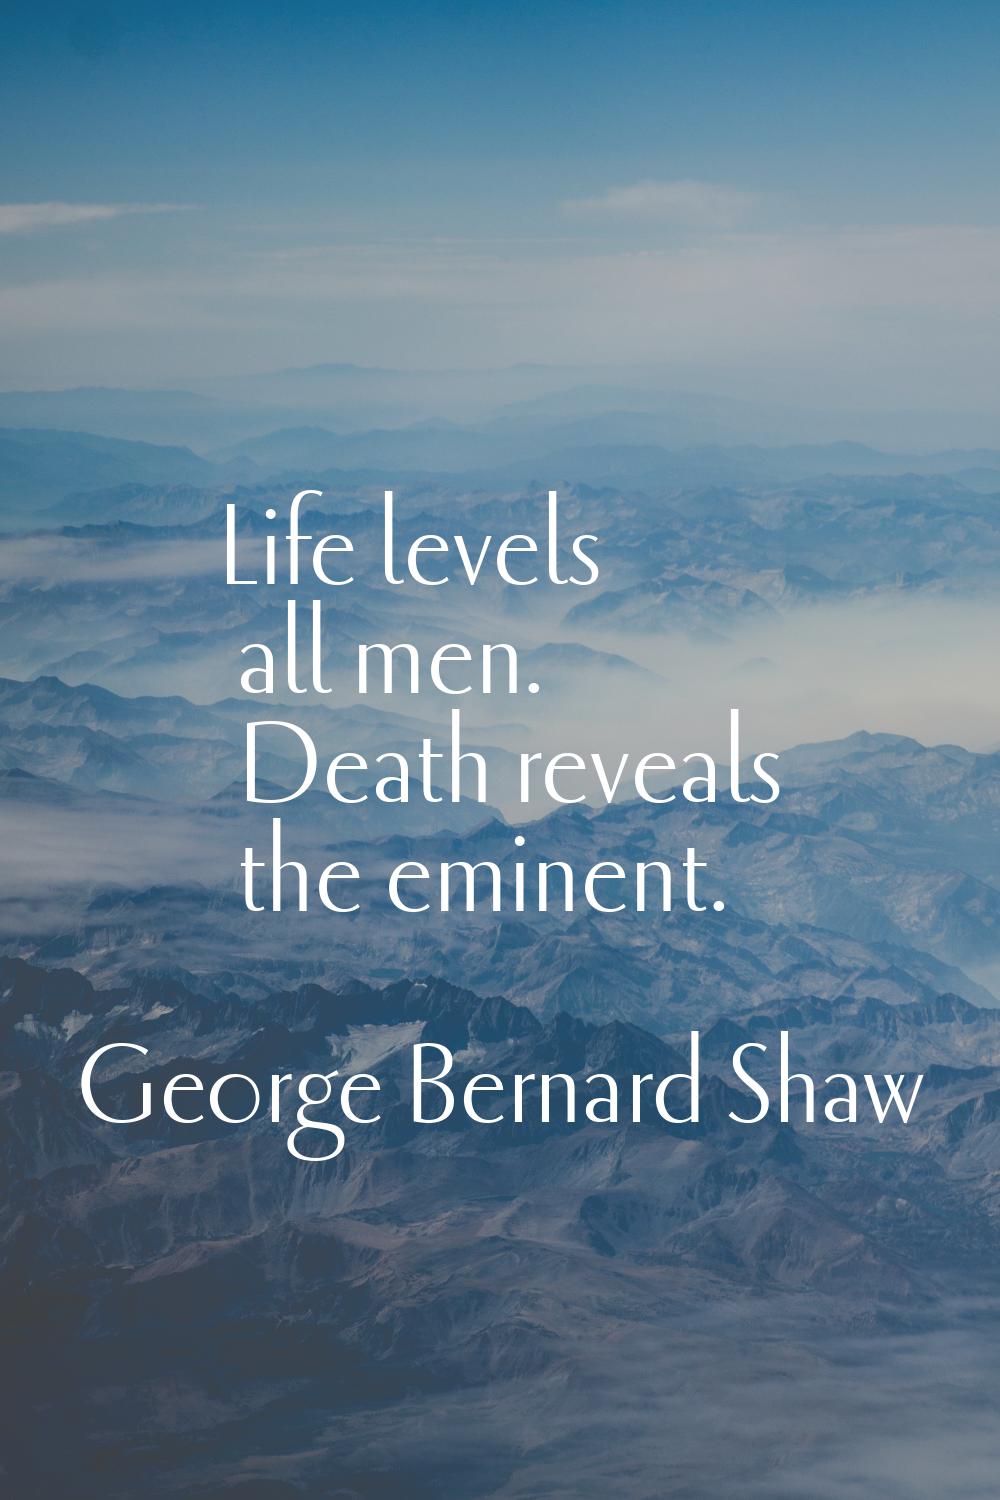 Life levels all men. Death reveals the eminent.